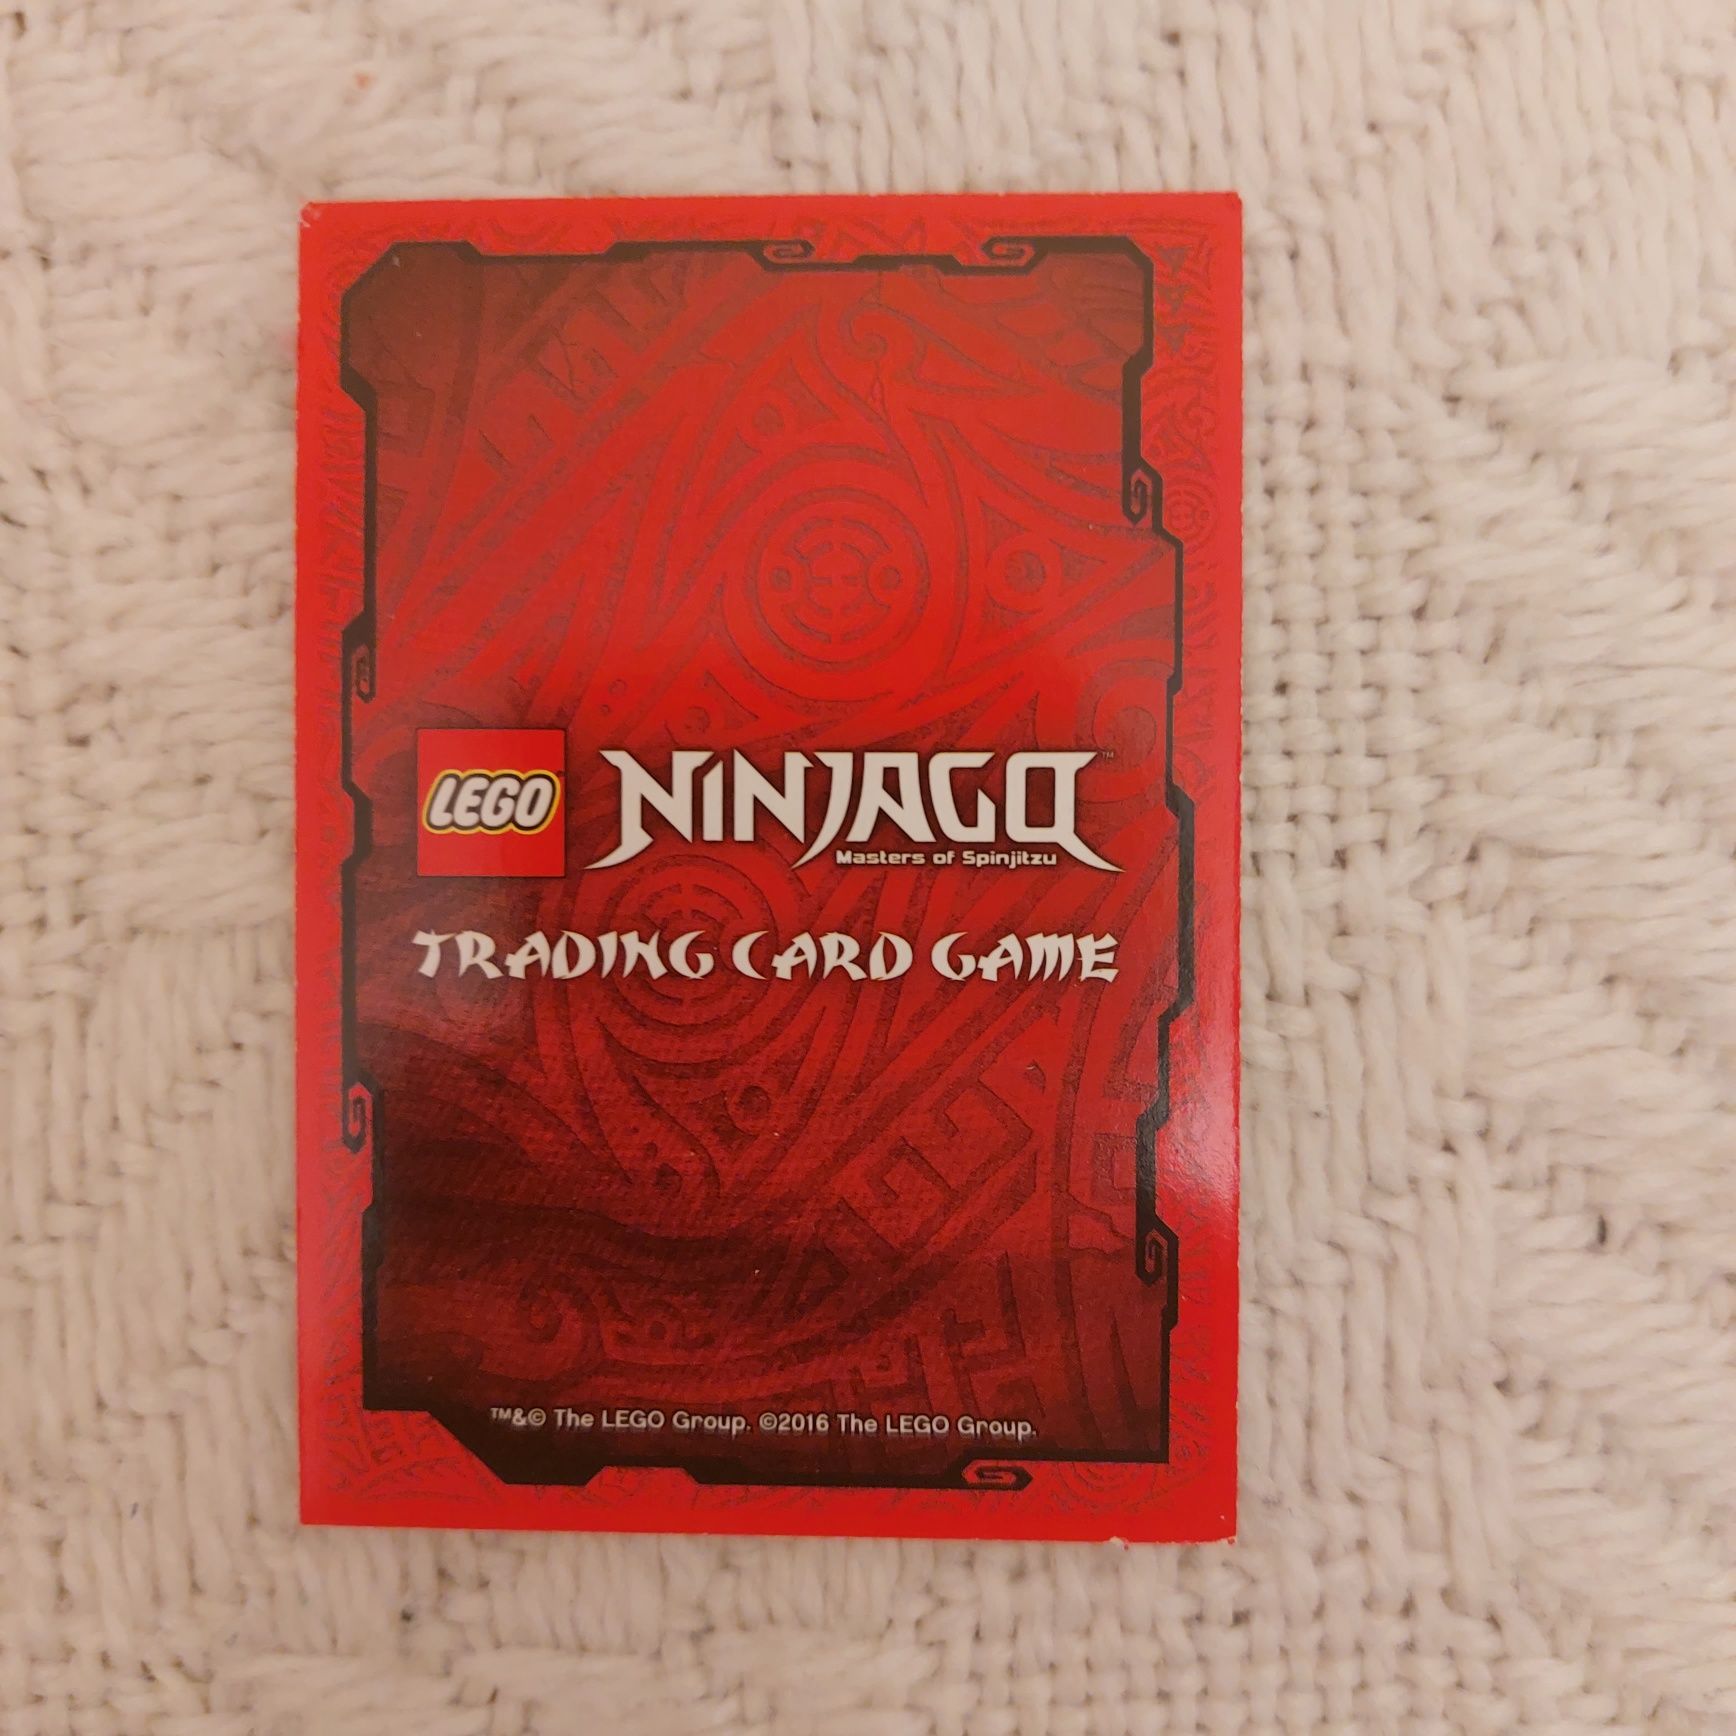 Samuraj Mech karta nr 154 Lego Ninjago seria 1 z 2016 r.